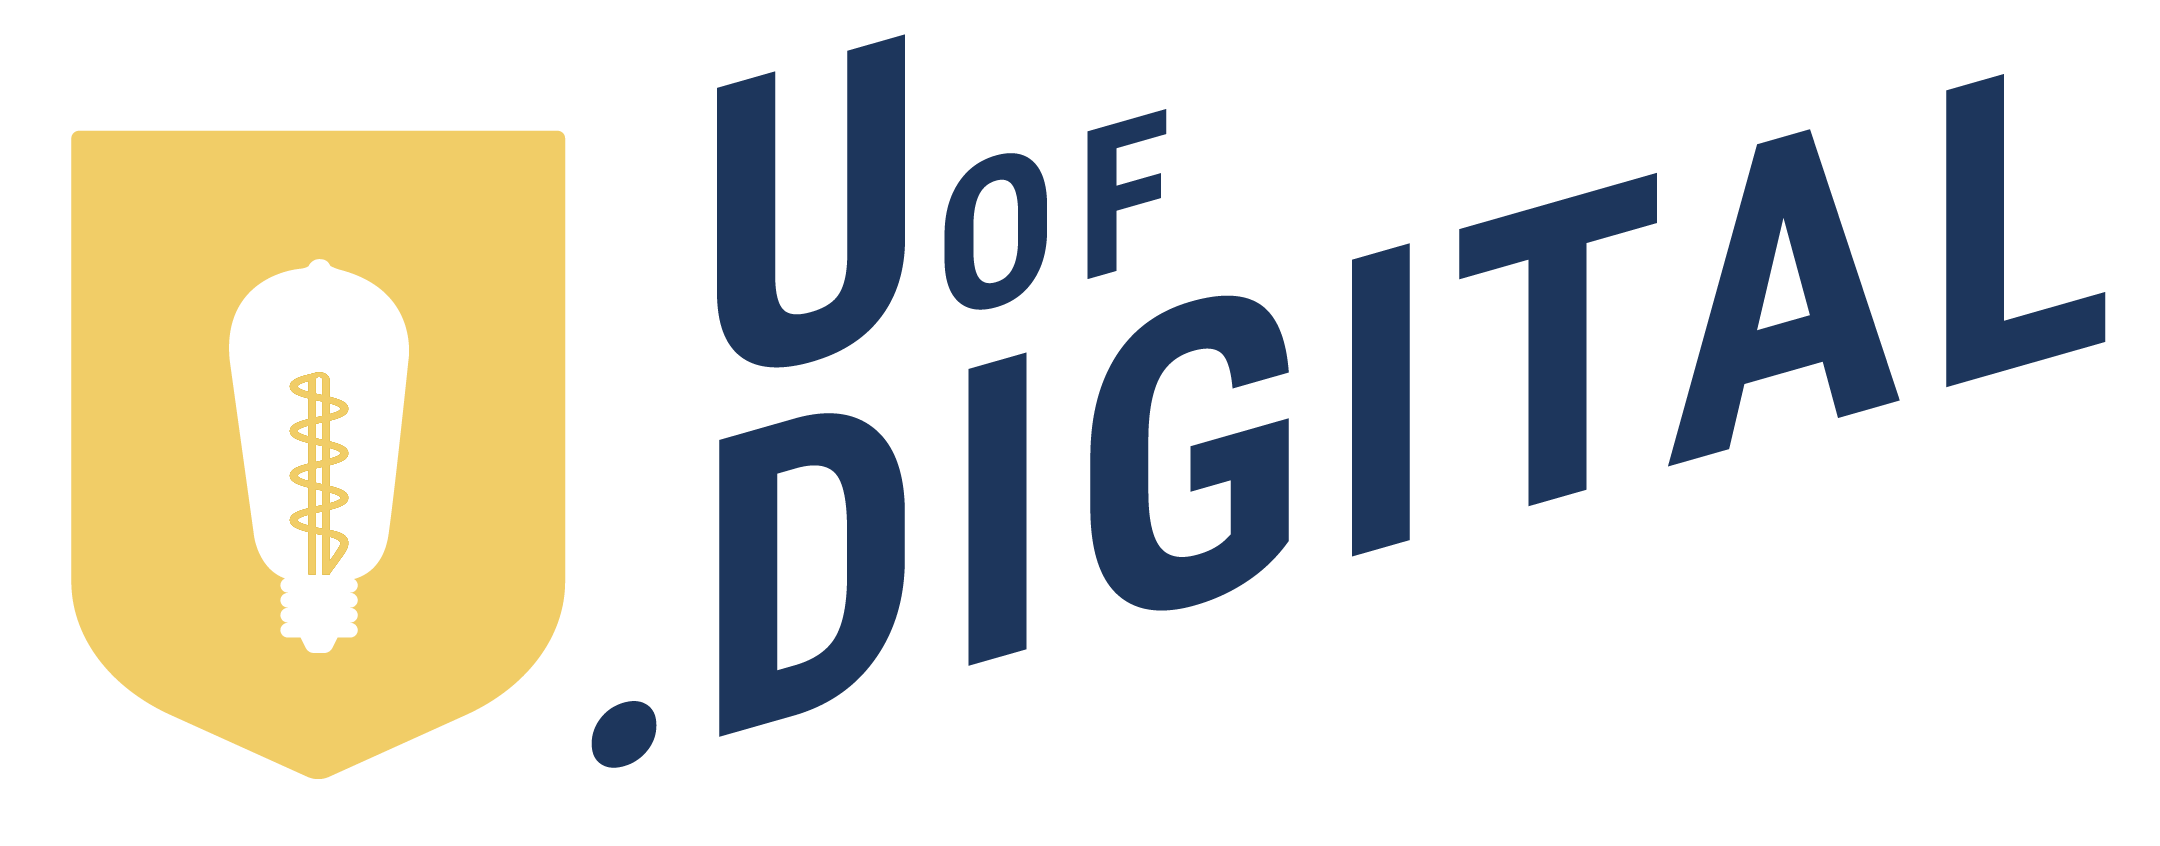 U of Digital